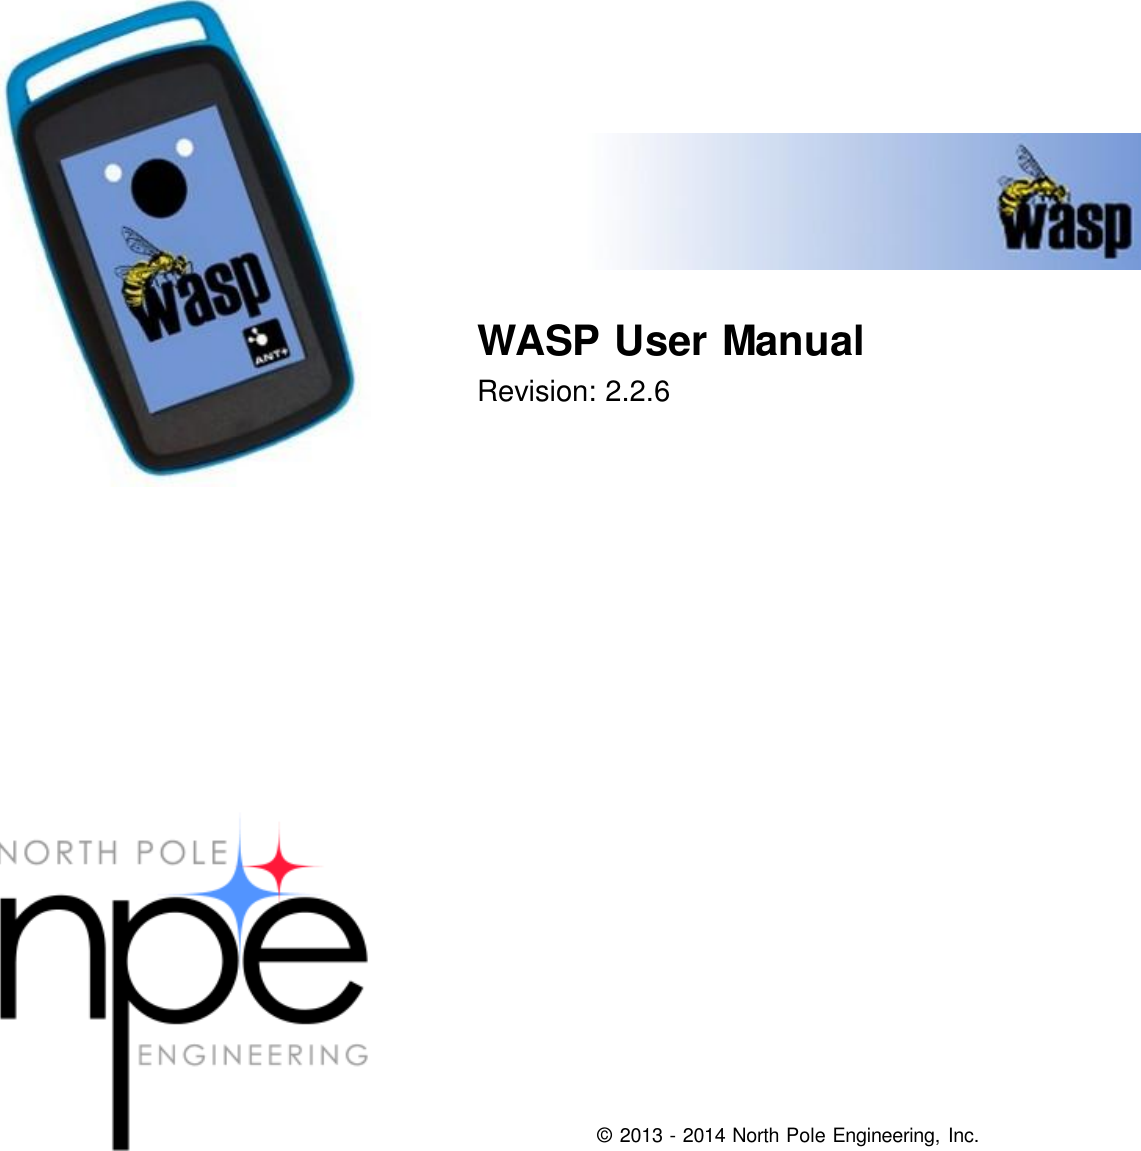                                                        © 2013 - 2014 North Pole Engineering, Inc. WASP User Manual Revision: 2.2.6 